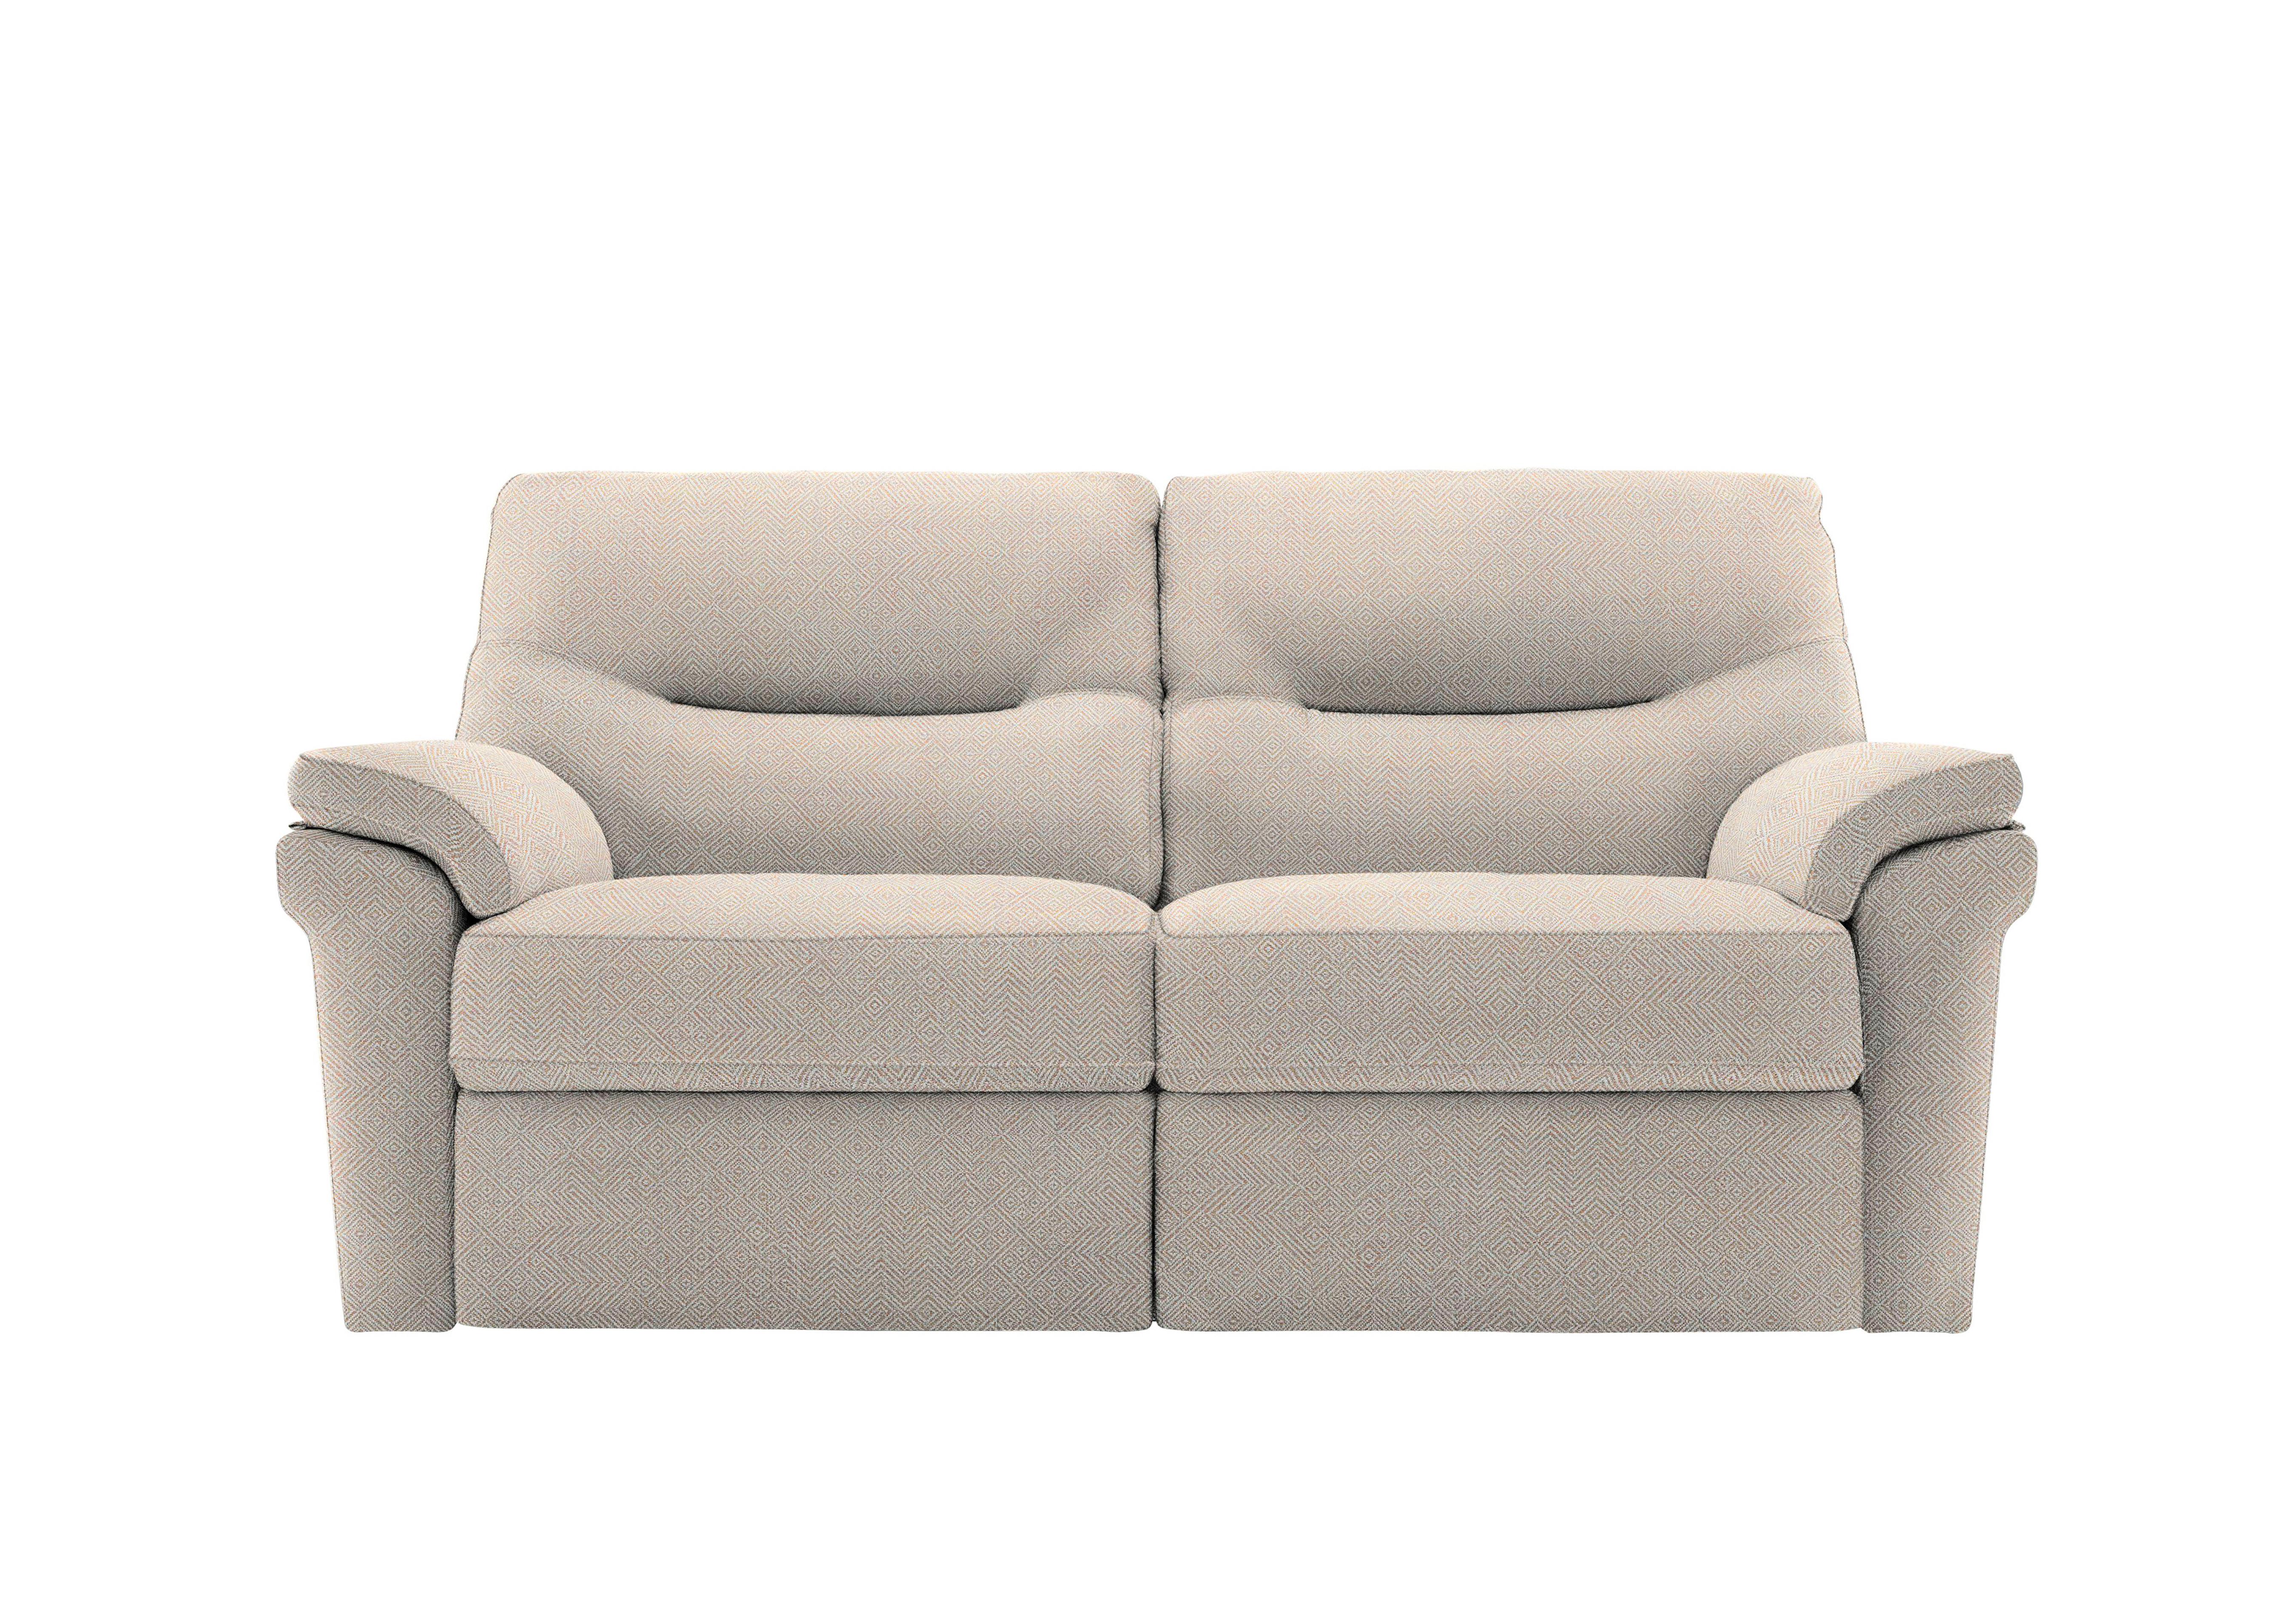 Seattle 2.5 Seater Fabric Sofa in B011 Nebular Blush on Furniture Village